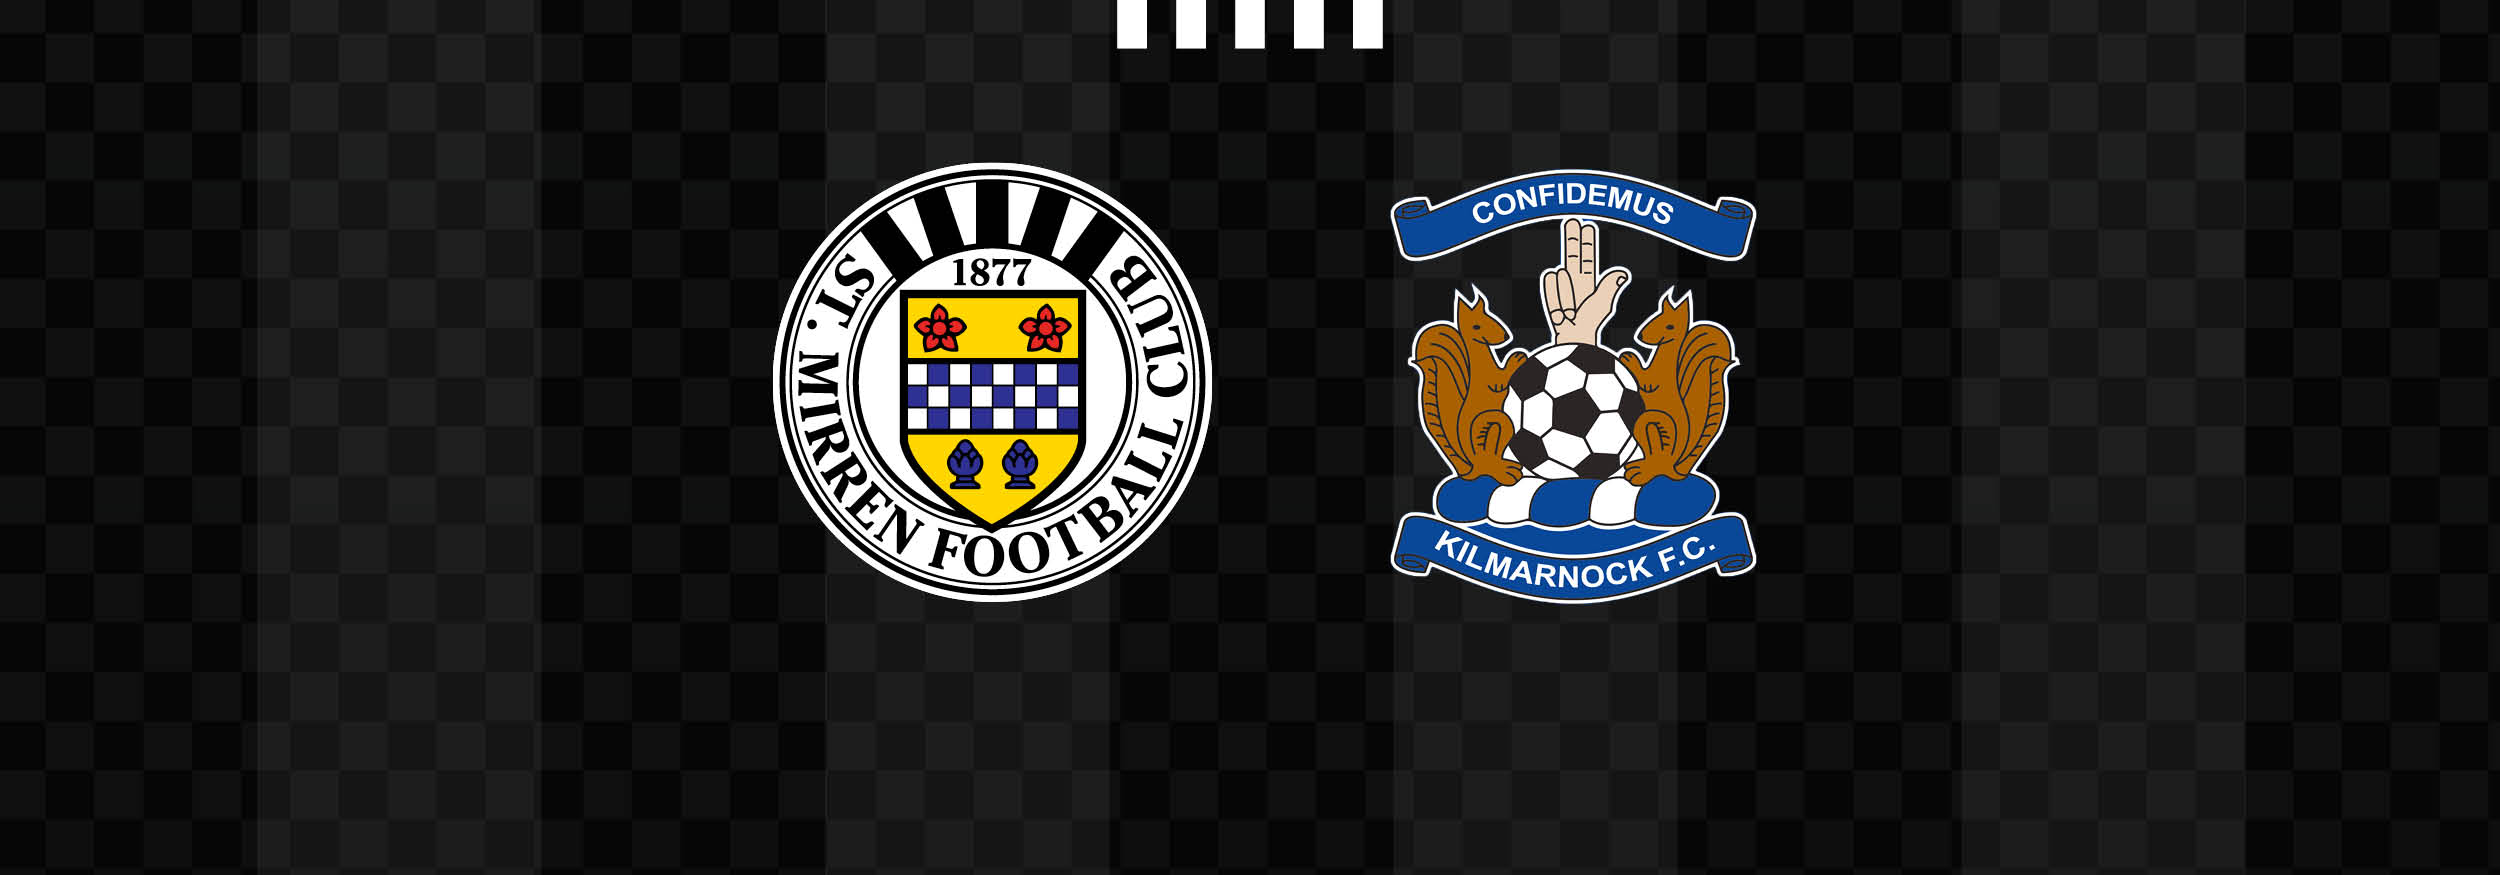 Matchday Info: St Mirren v Kilmarnock (11th May)